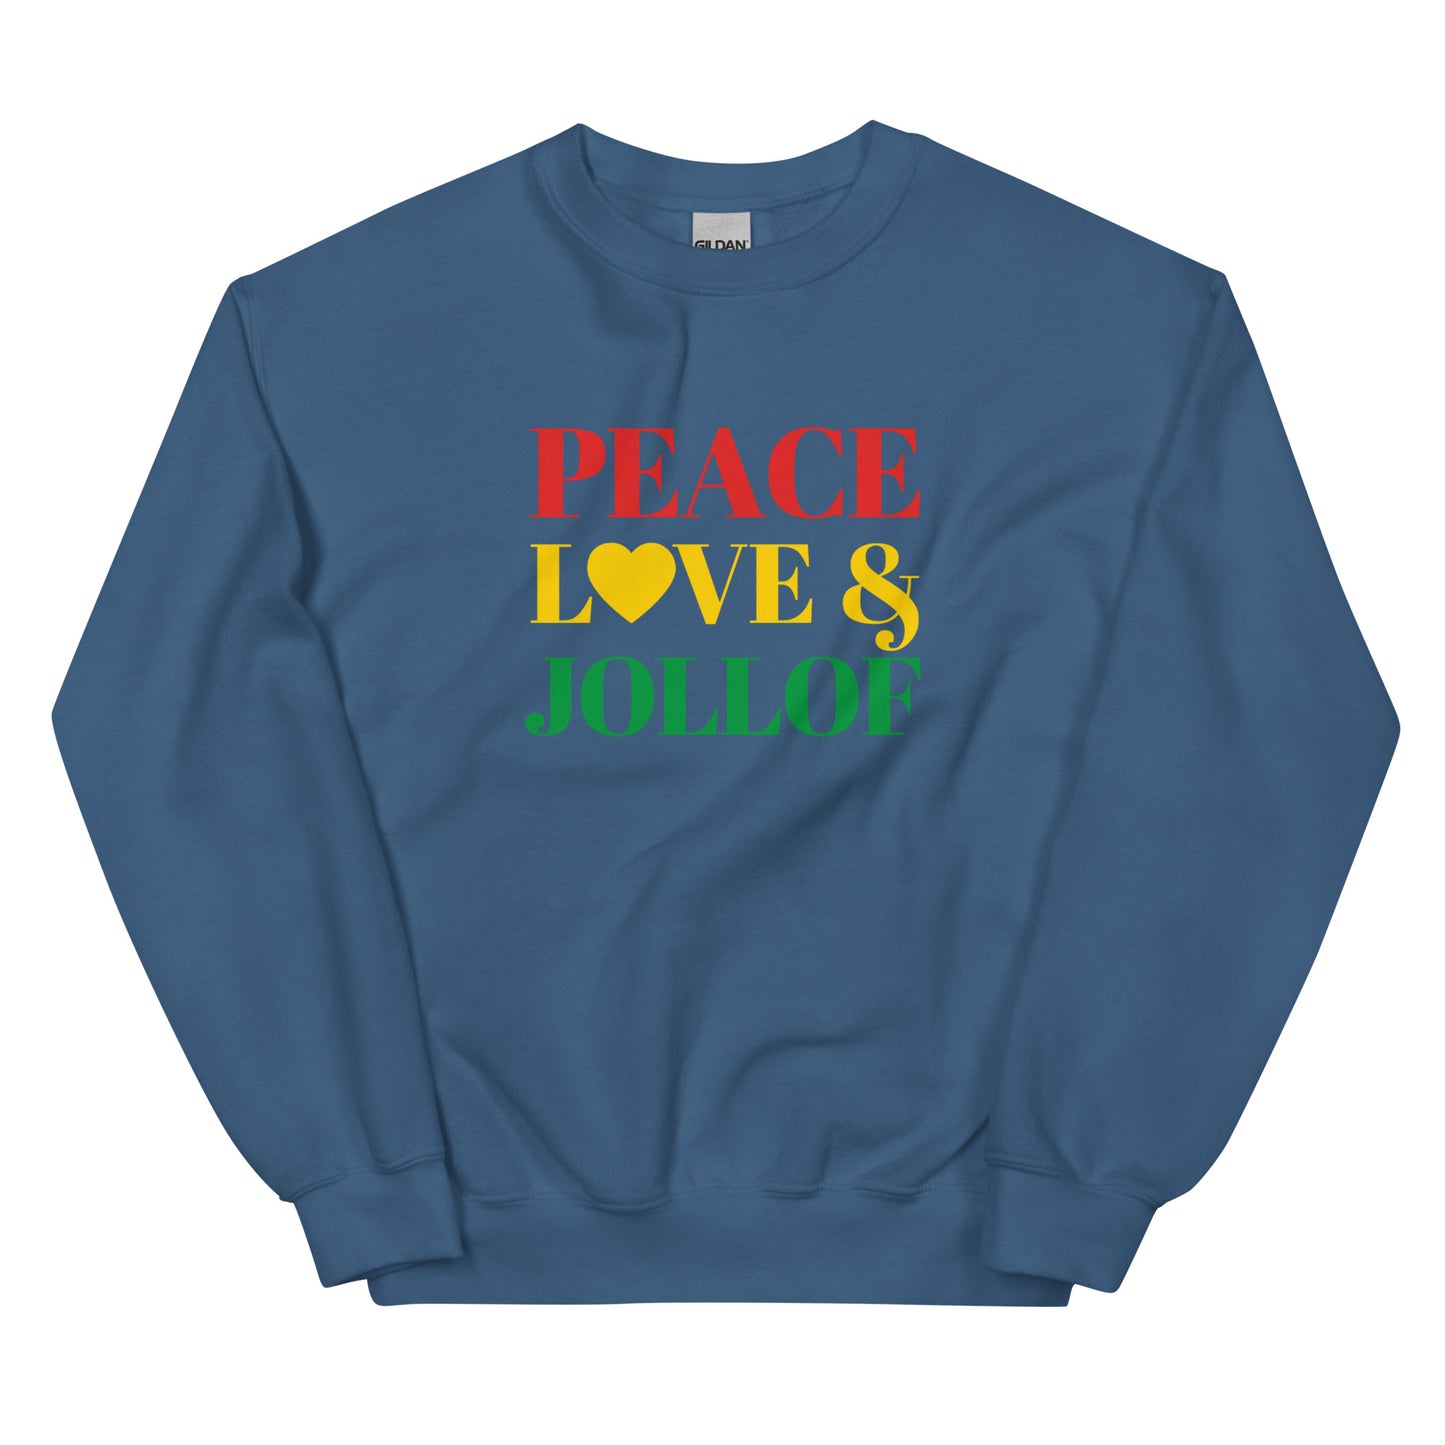 Peace, Love & Jollof Ghana Themed Unisex Sweatshirt